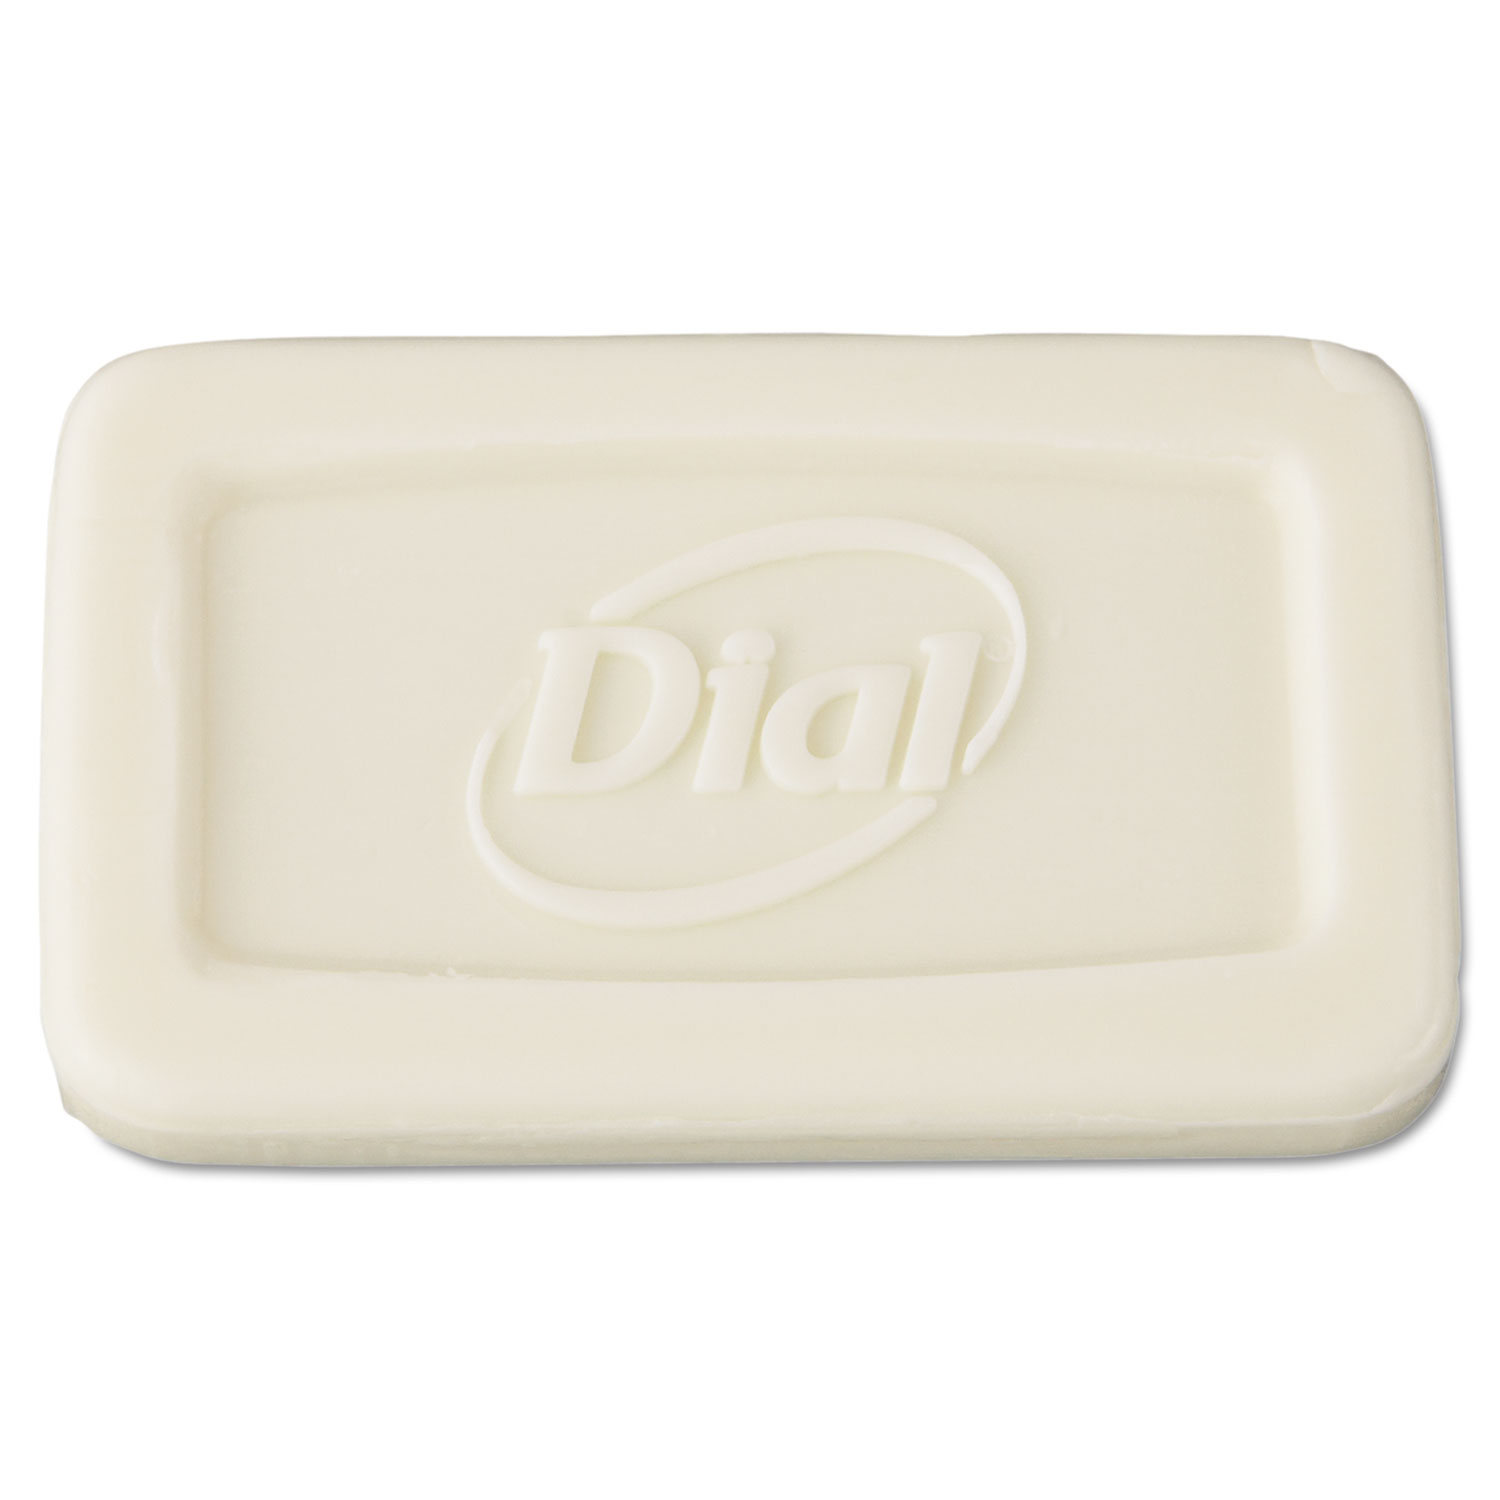 Individually Wrapped Basics Bar Soap, # 1 1/2 Bar, 500/Carton